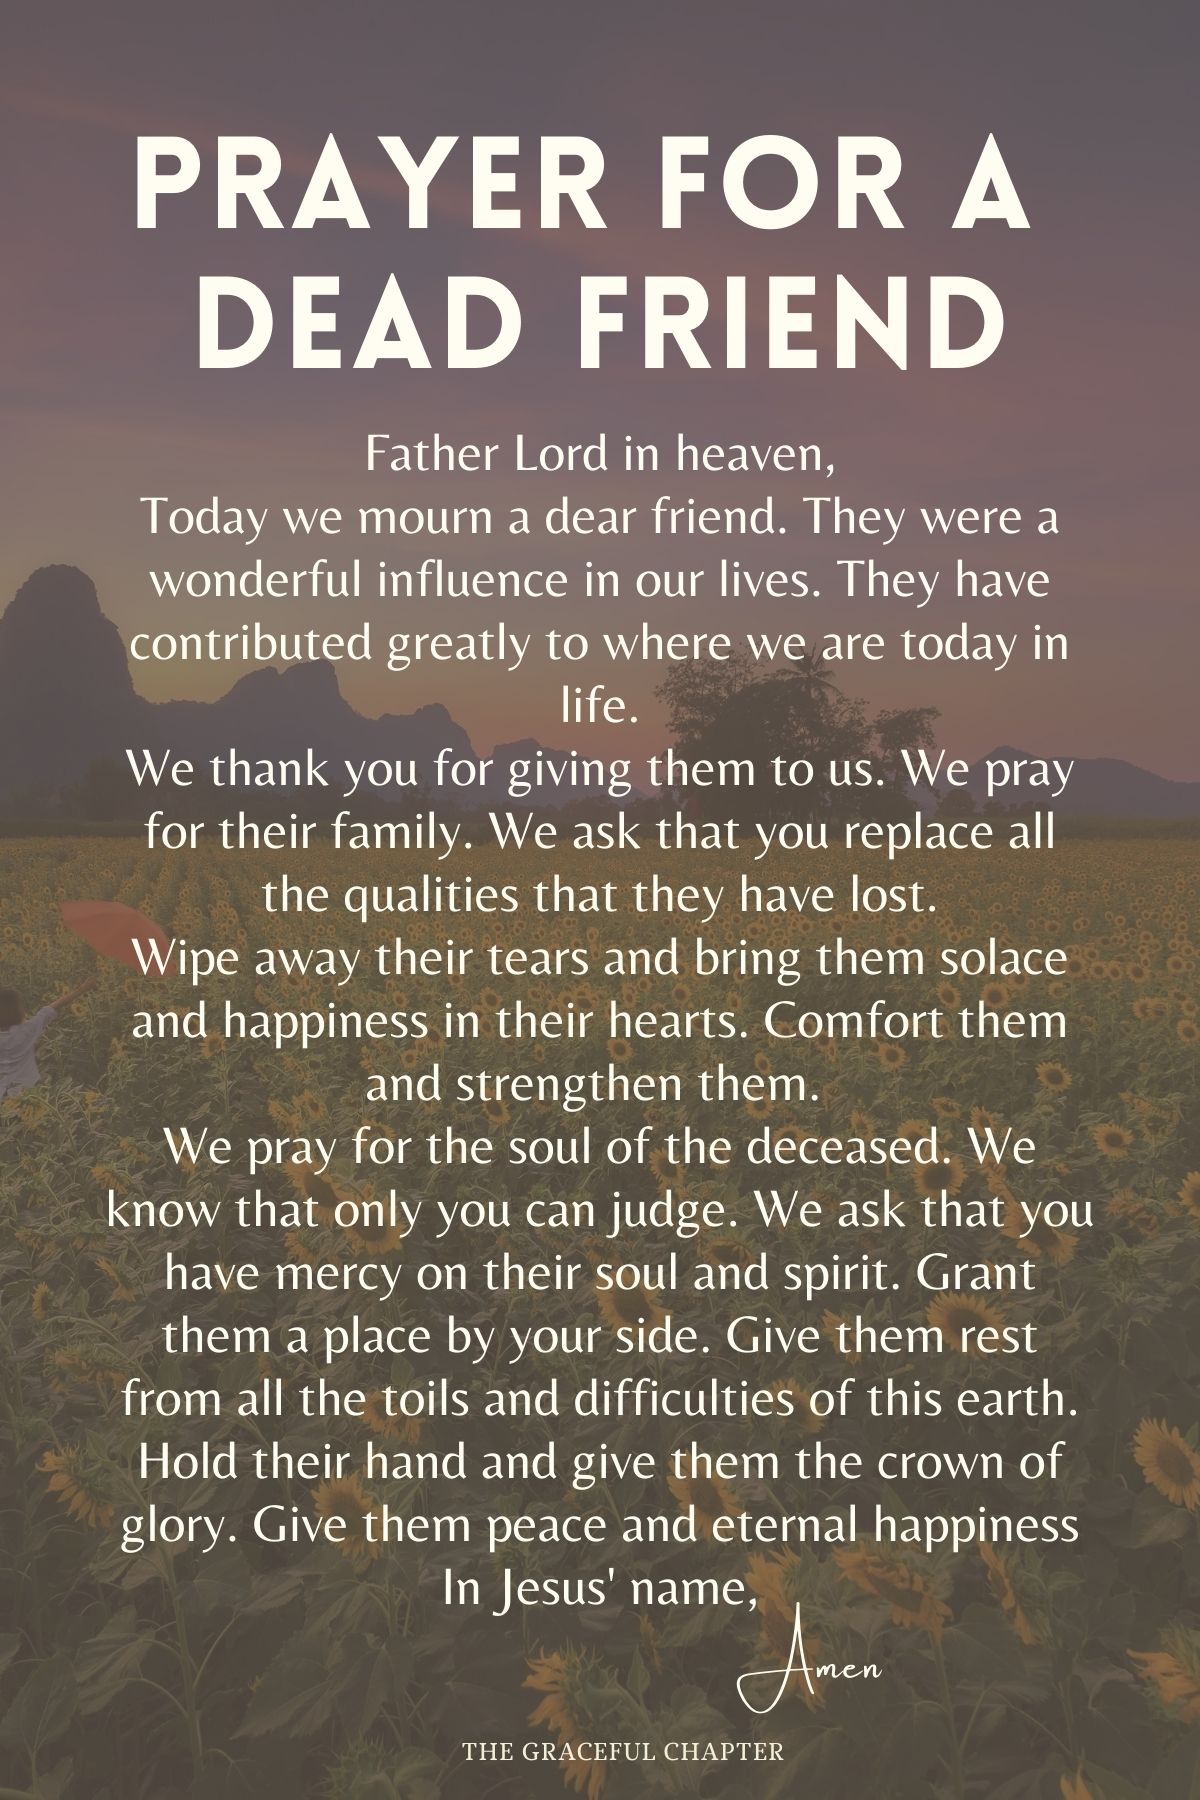 Prayer for a dead friend